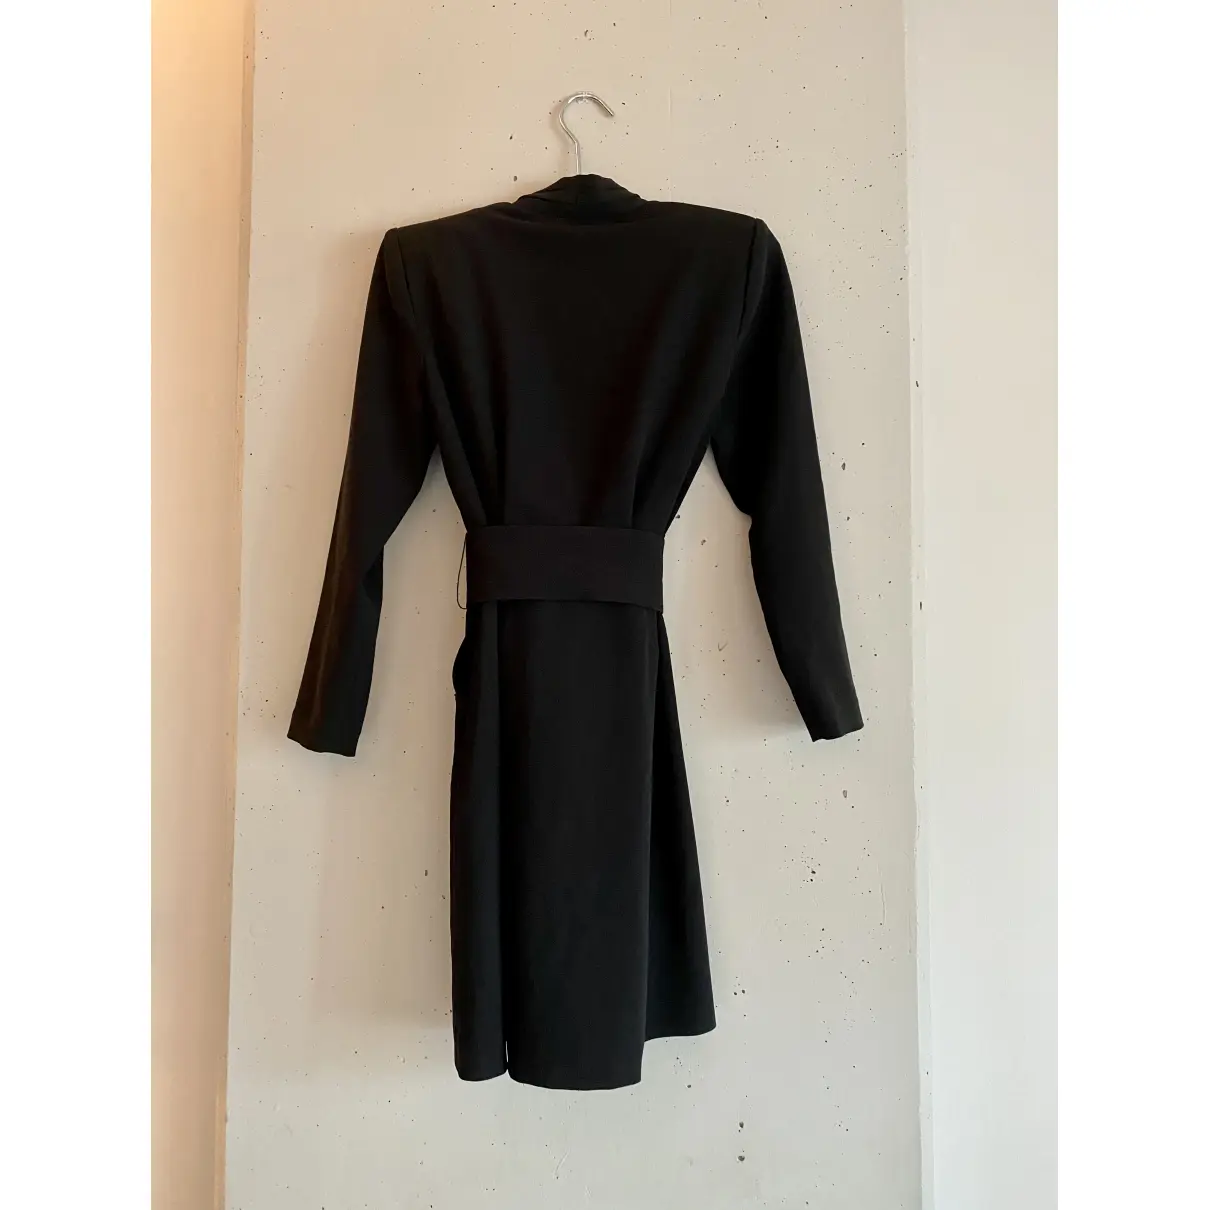 Buy A.L.C Mini dress online